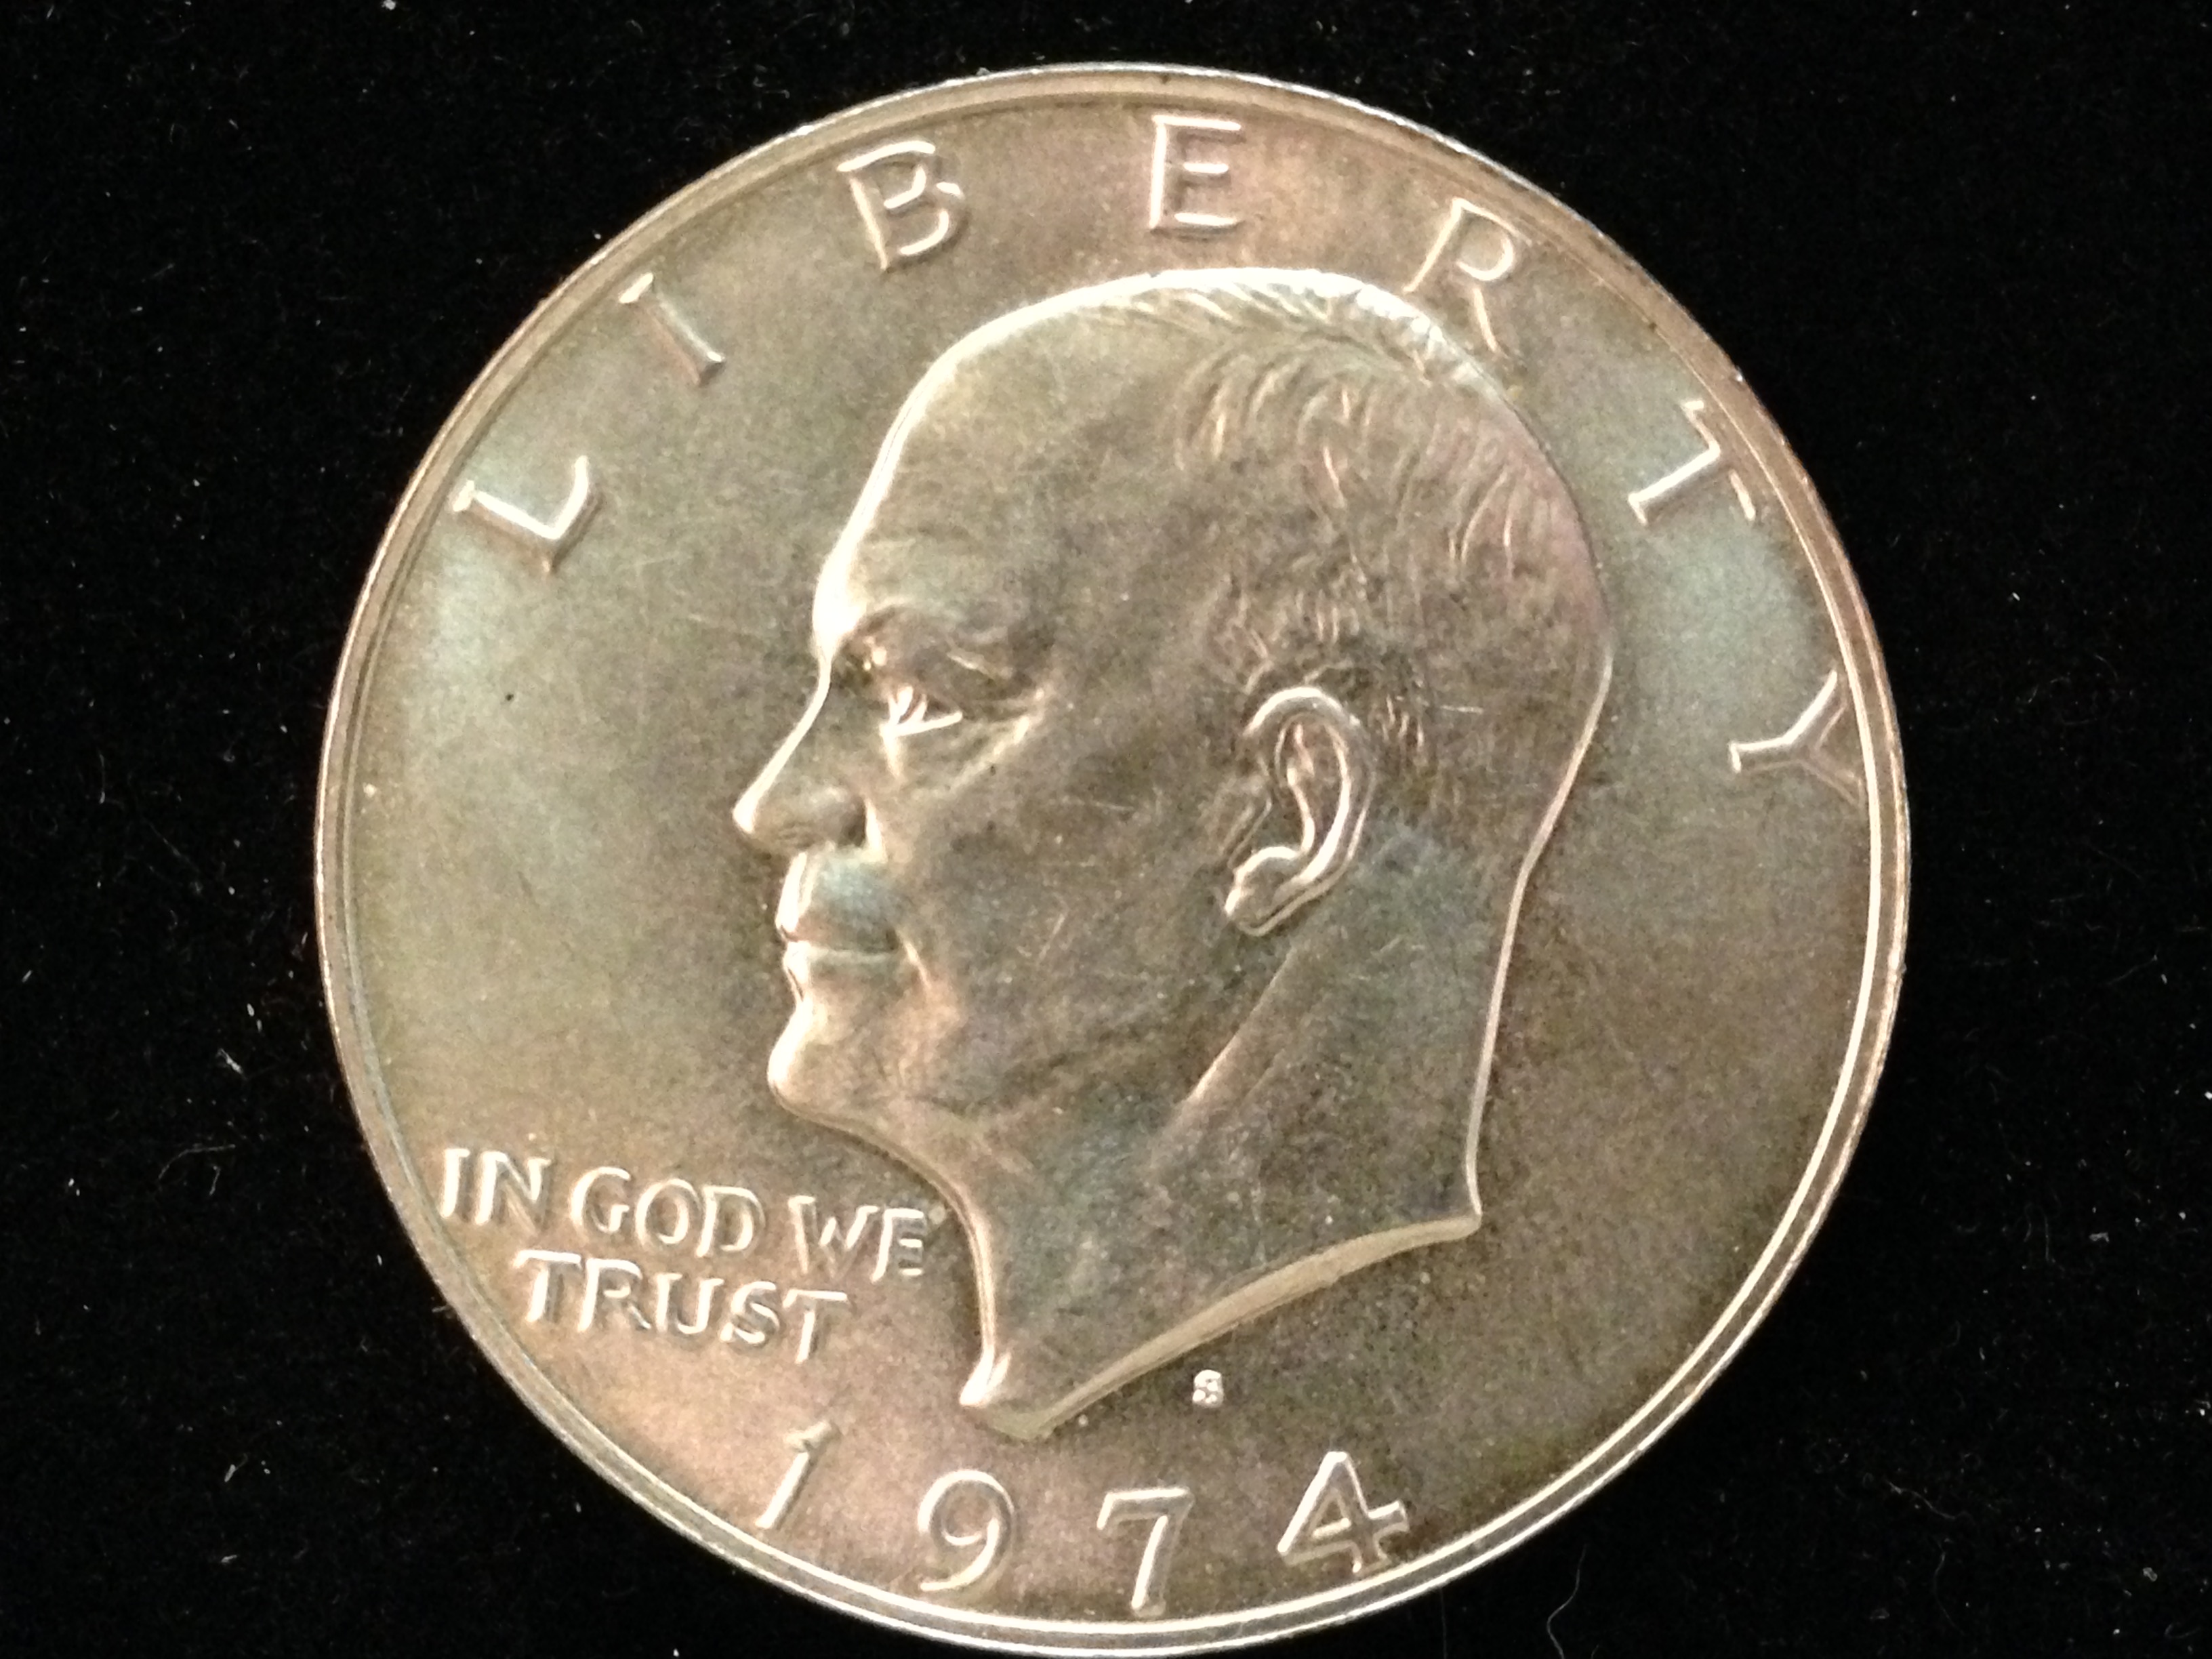 1972 dwight d eisenhower silver dollar value